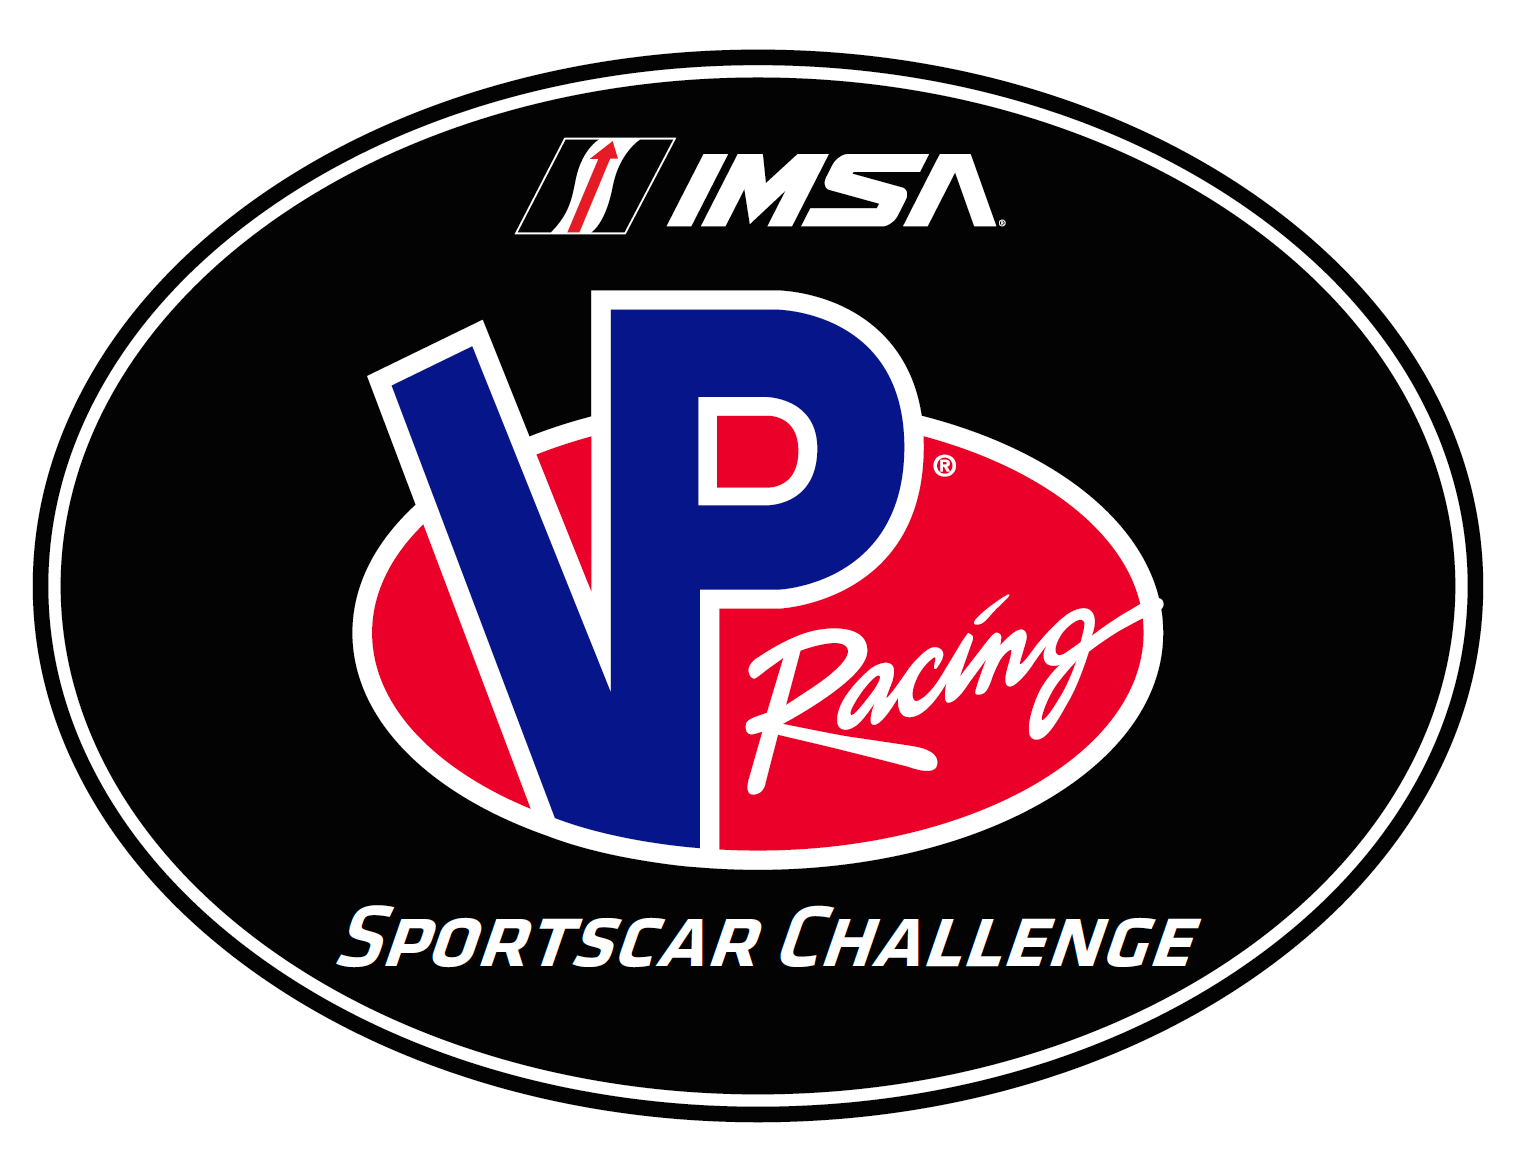 VP Racing and IMSA Extend Relationship Through 2030